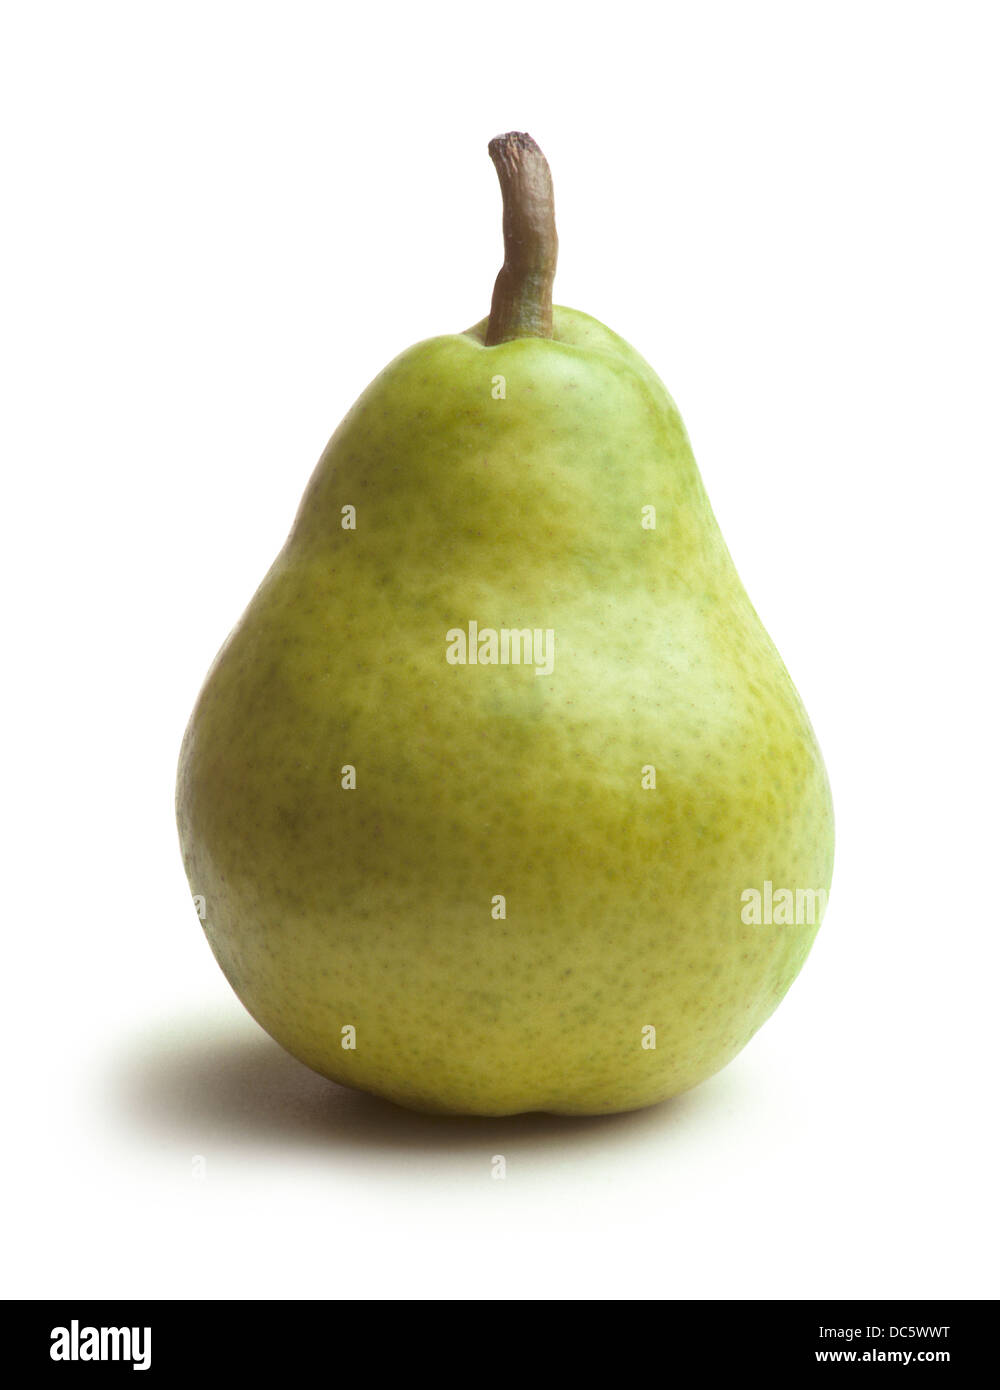 Single green Bartlett pear on white background Stock Photo